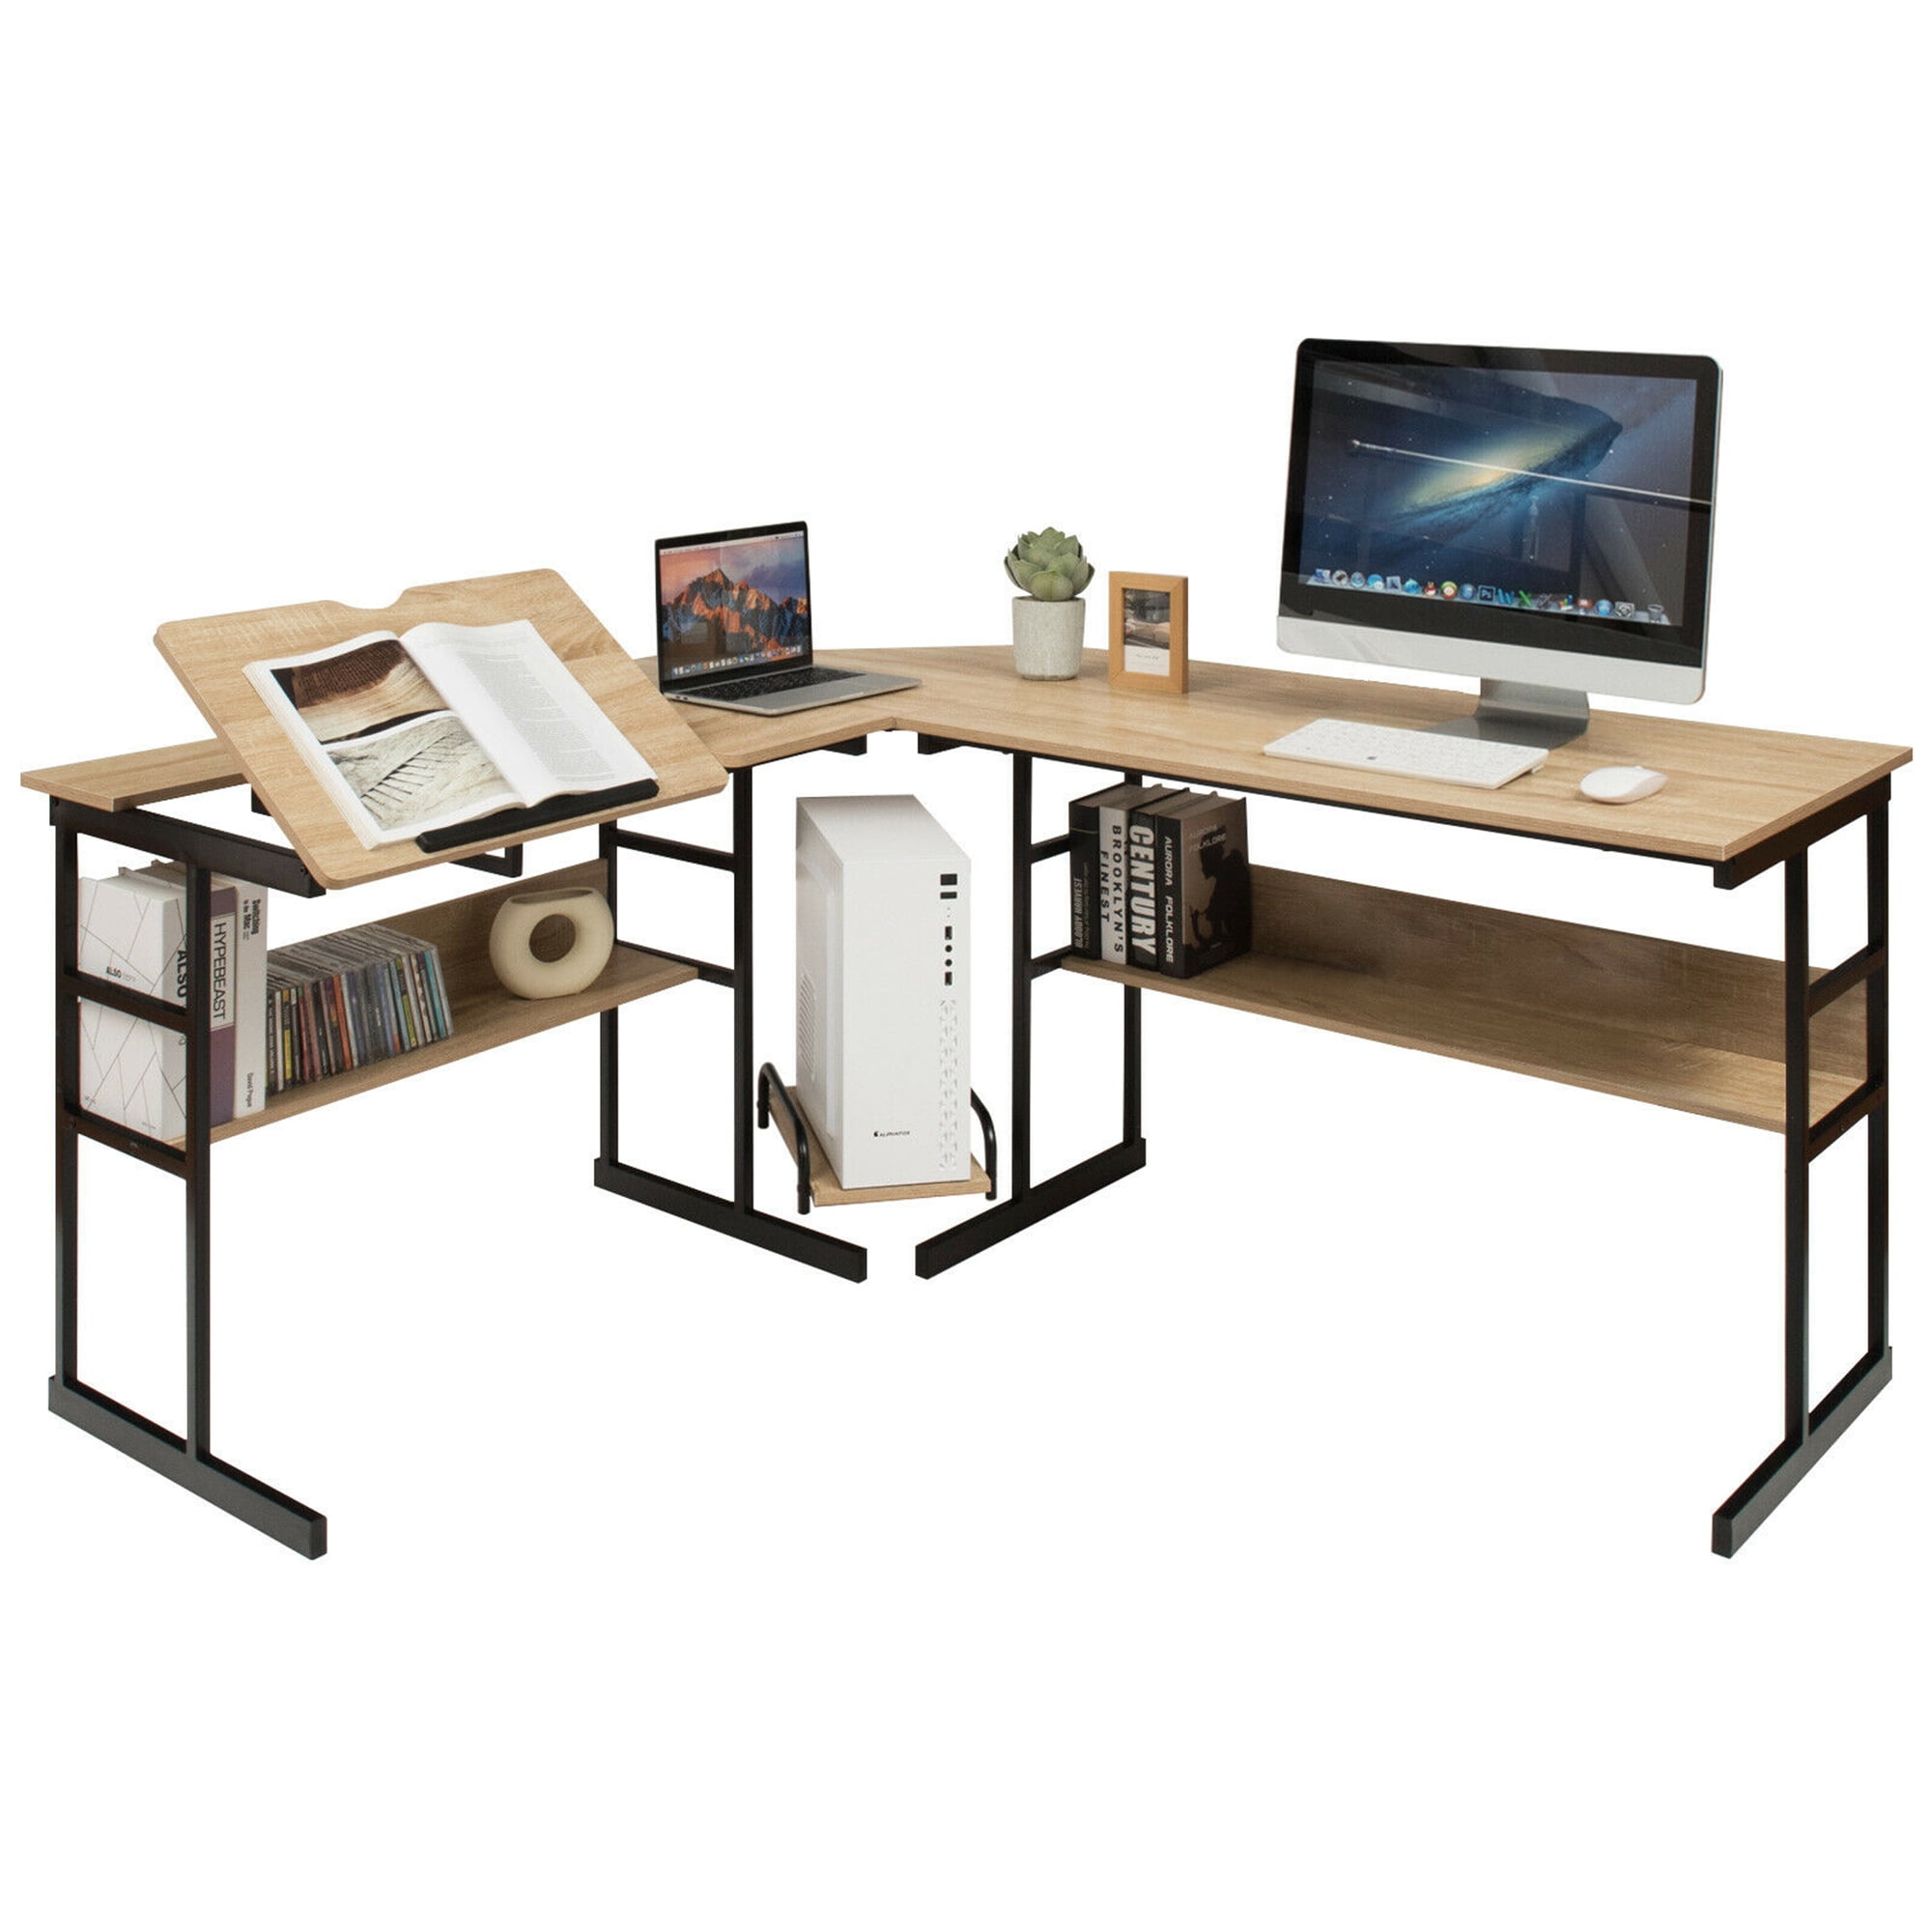 Stand Up Desk Store 48 Crank Adjustable Height Split Level Drafting Table Ergonomic Desk with Monitor Shelf (White/Birch)